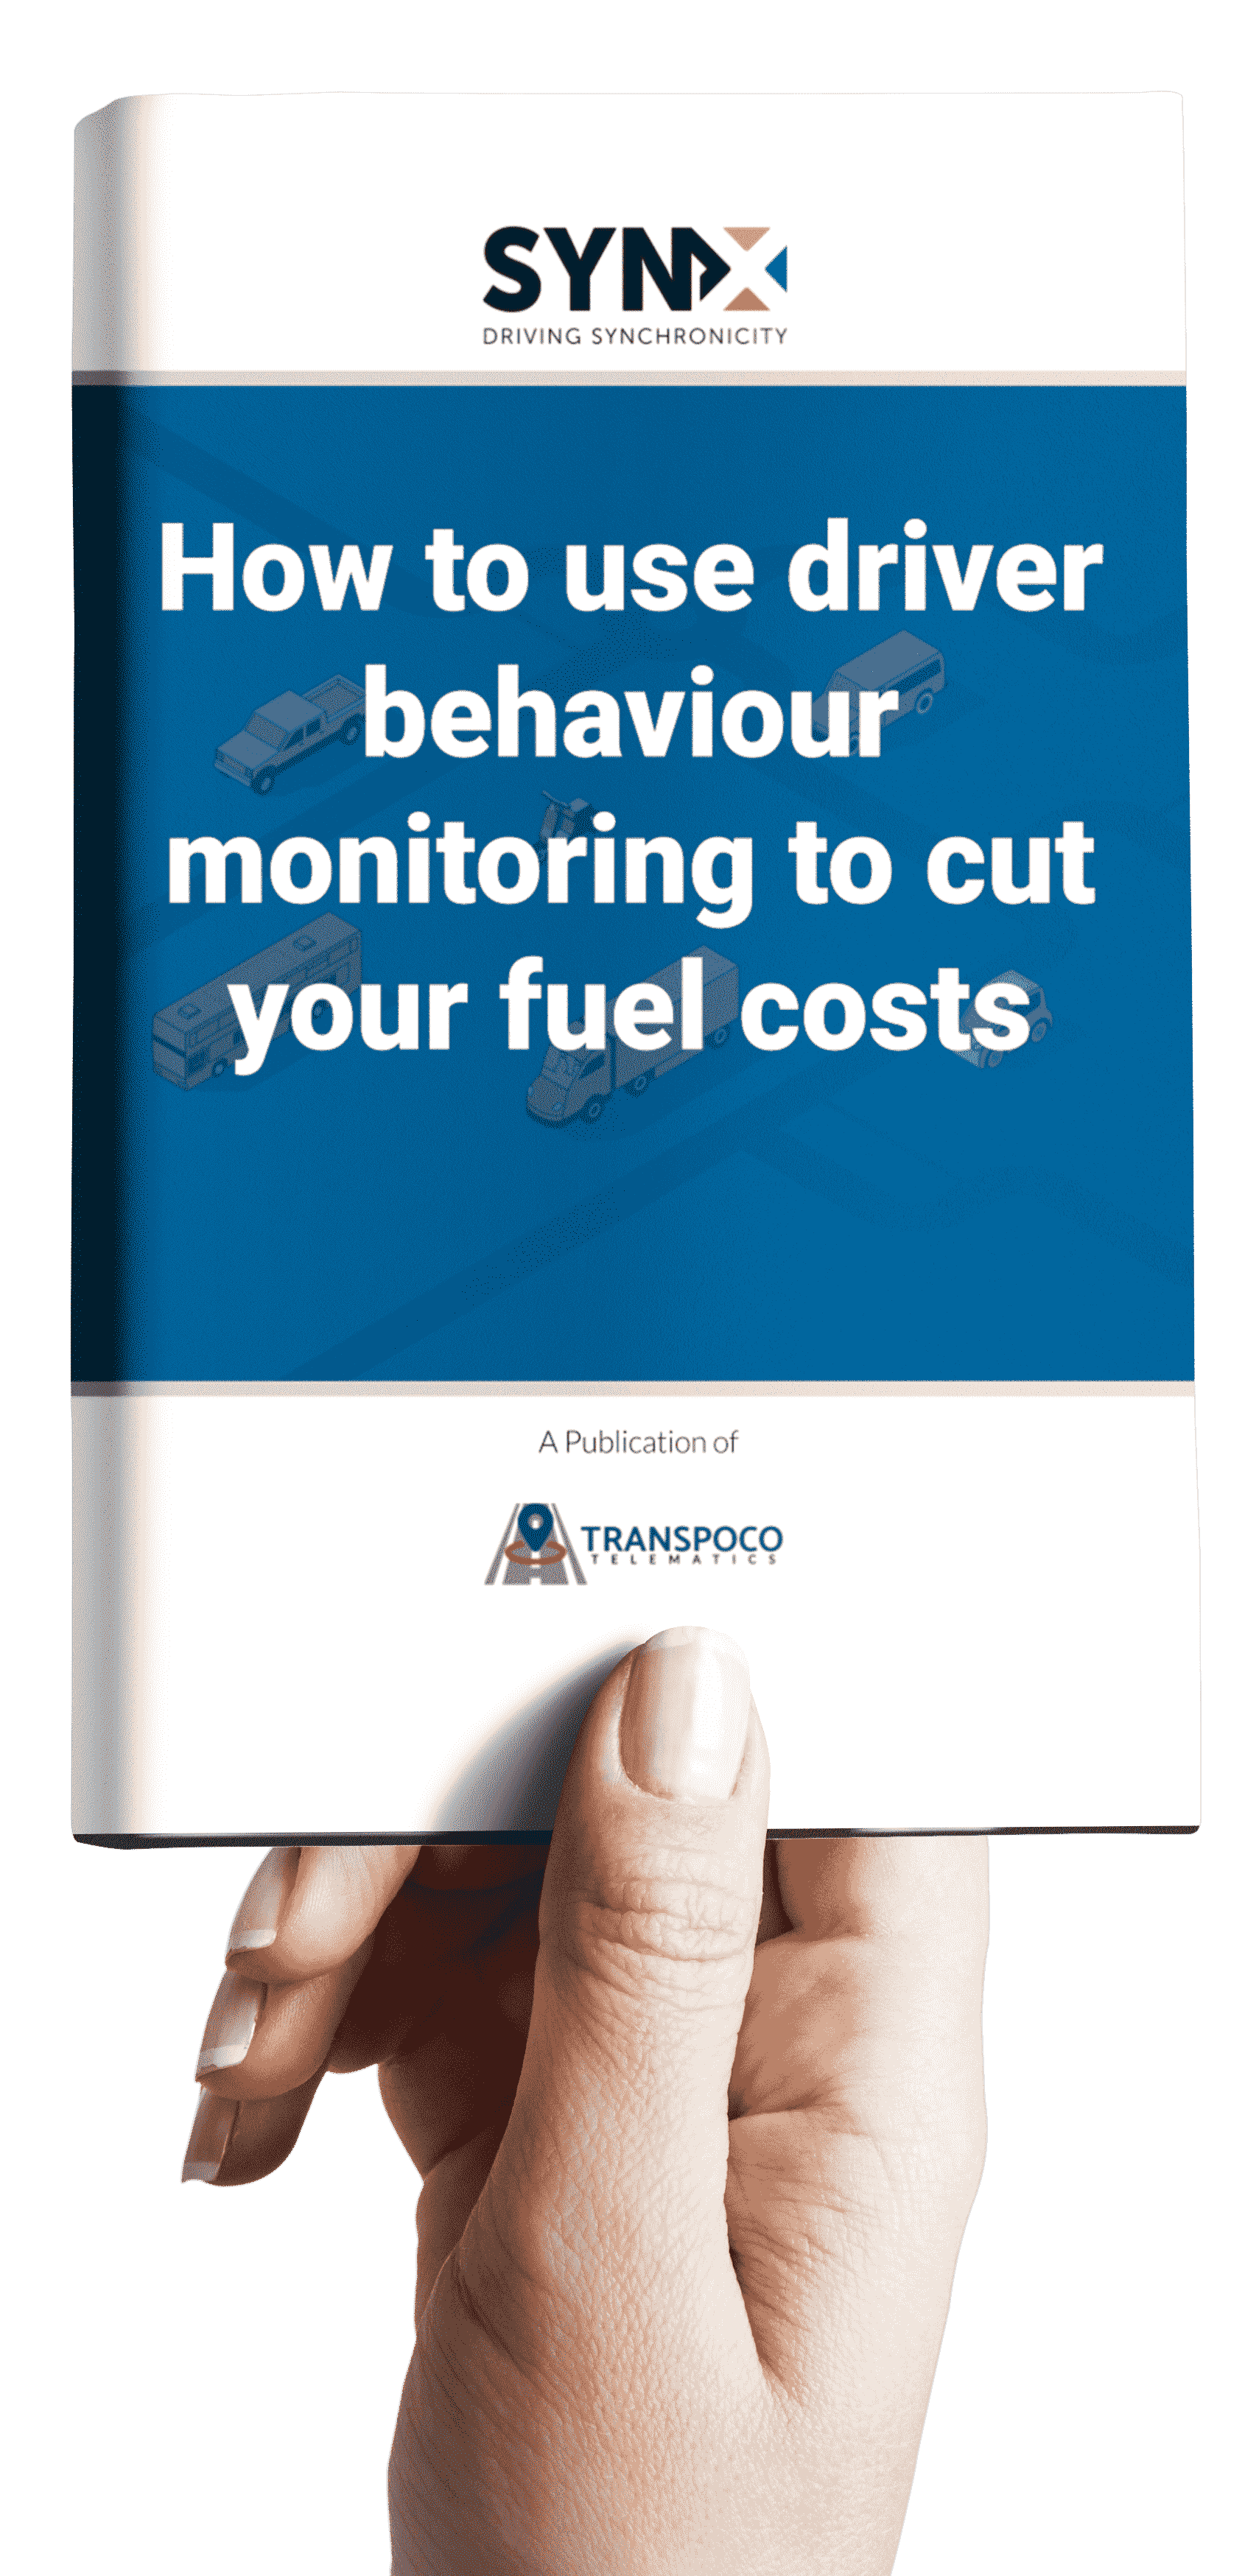 eBook_How to use driver behaviour monitoring_EN - MOCKUP